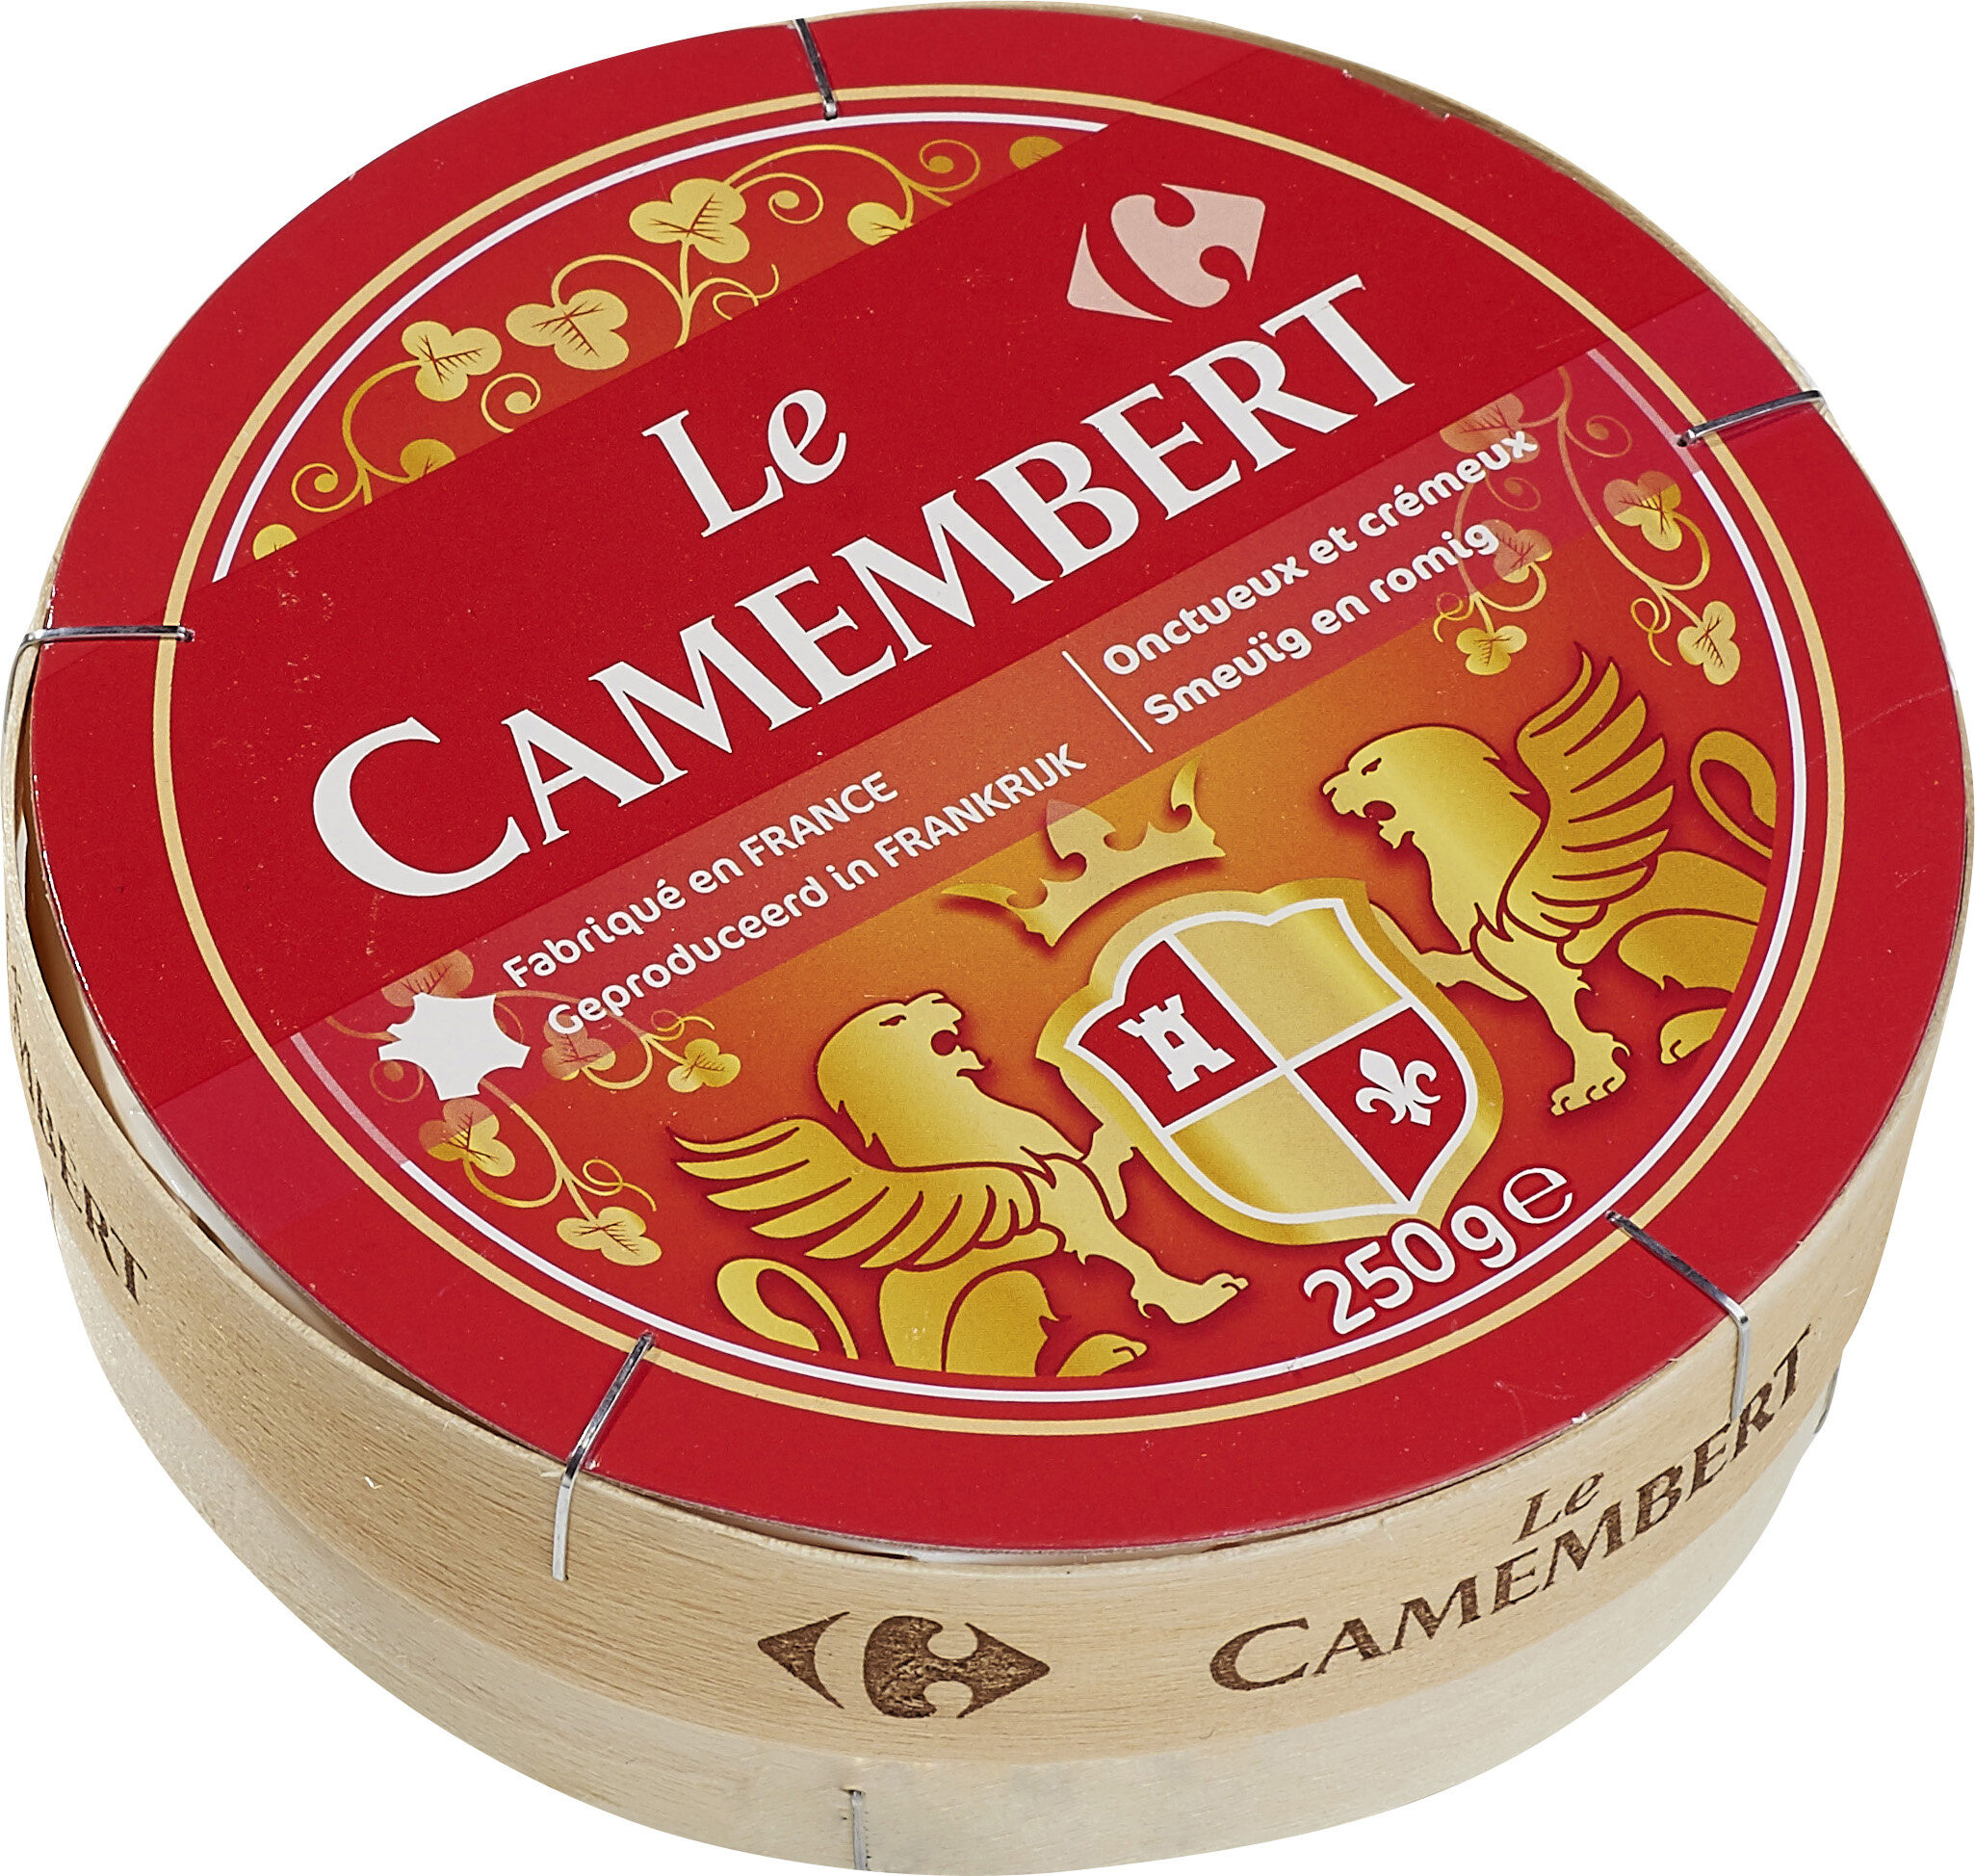 Camembert - Product - fr